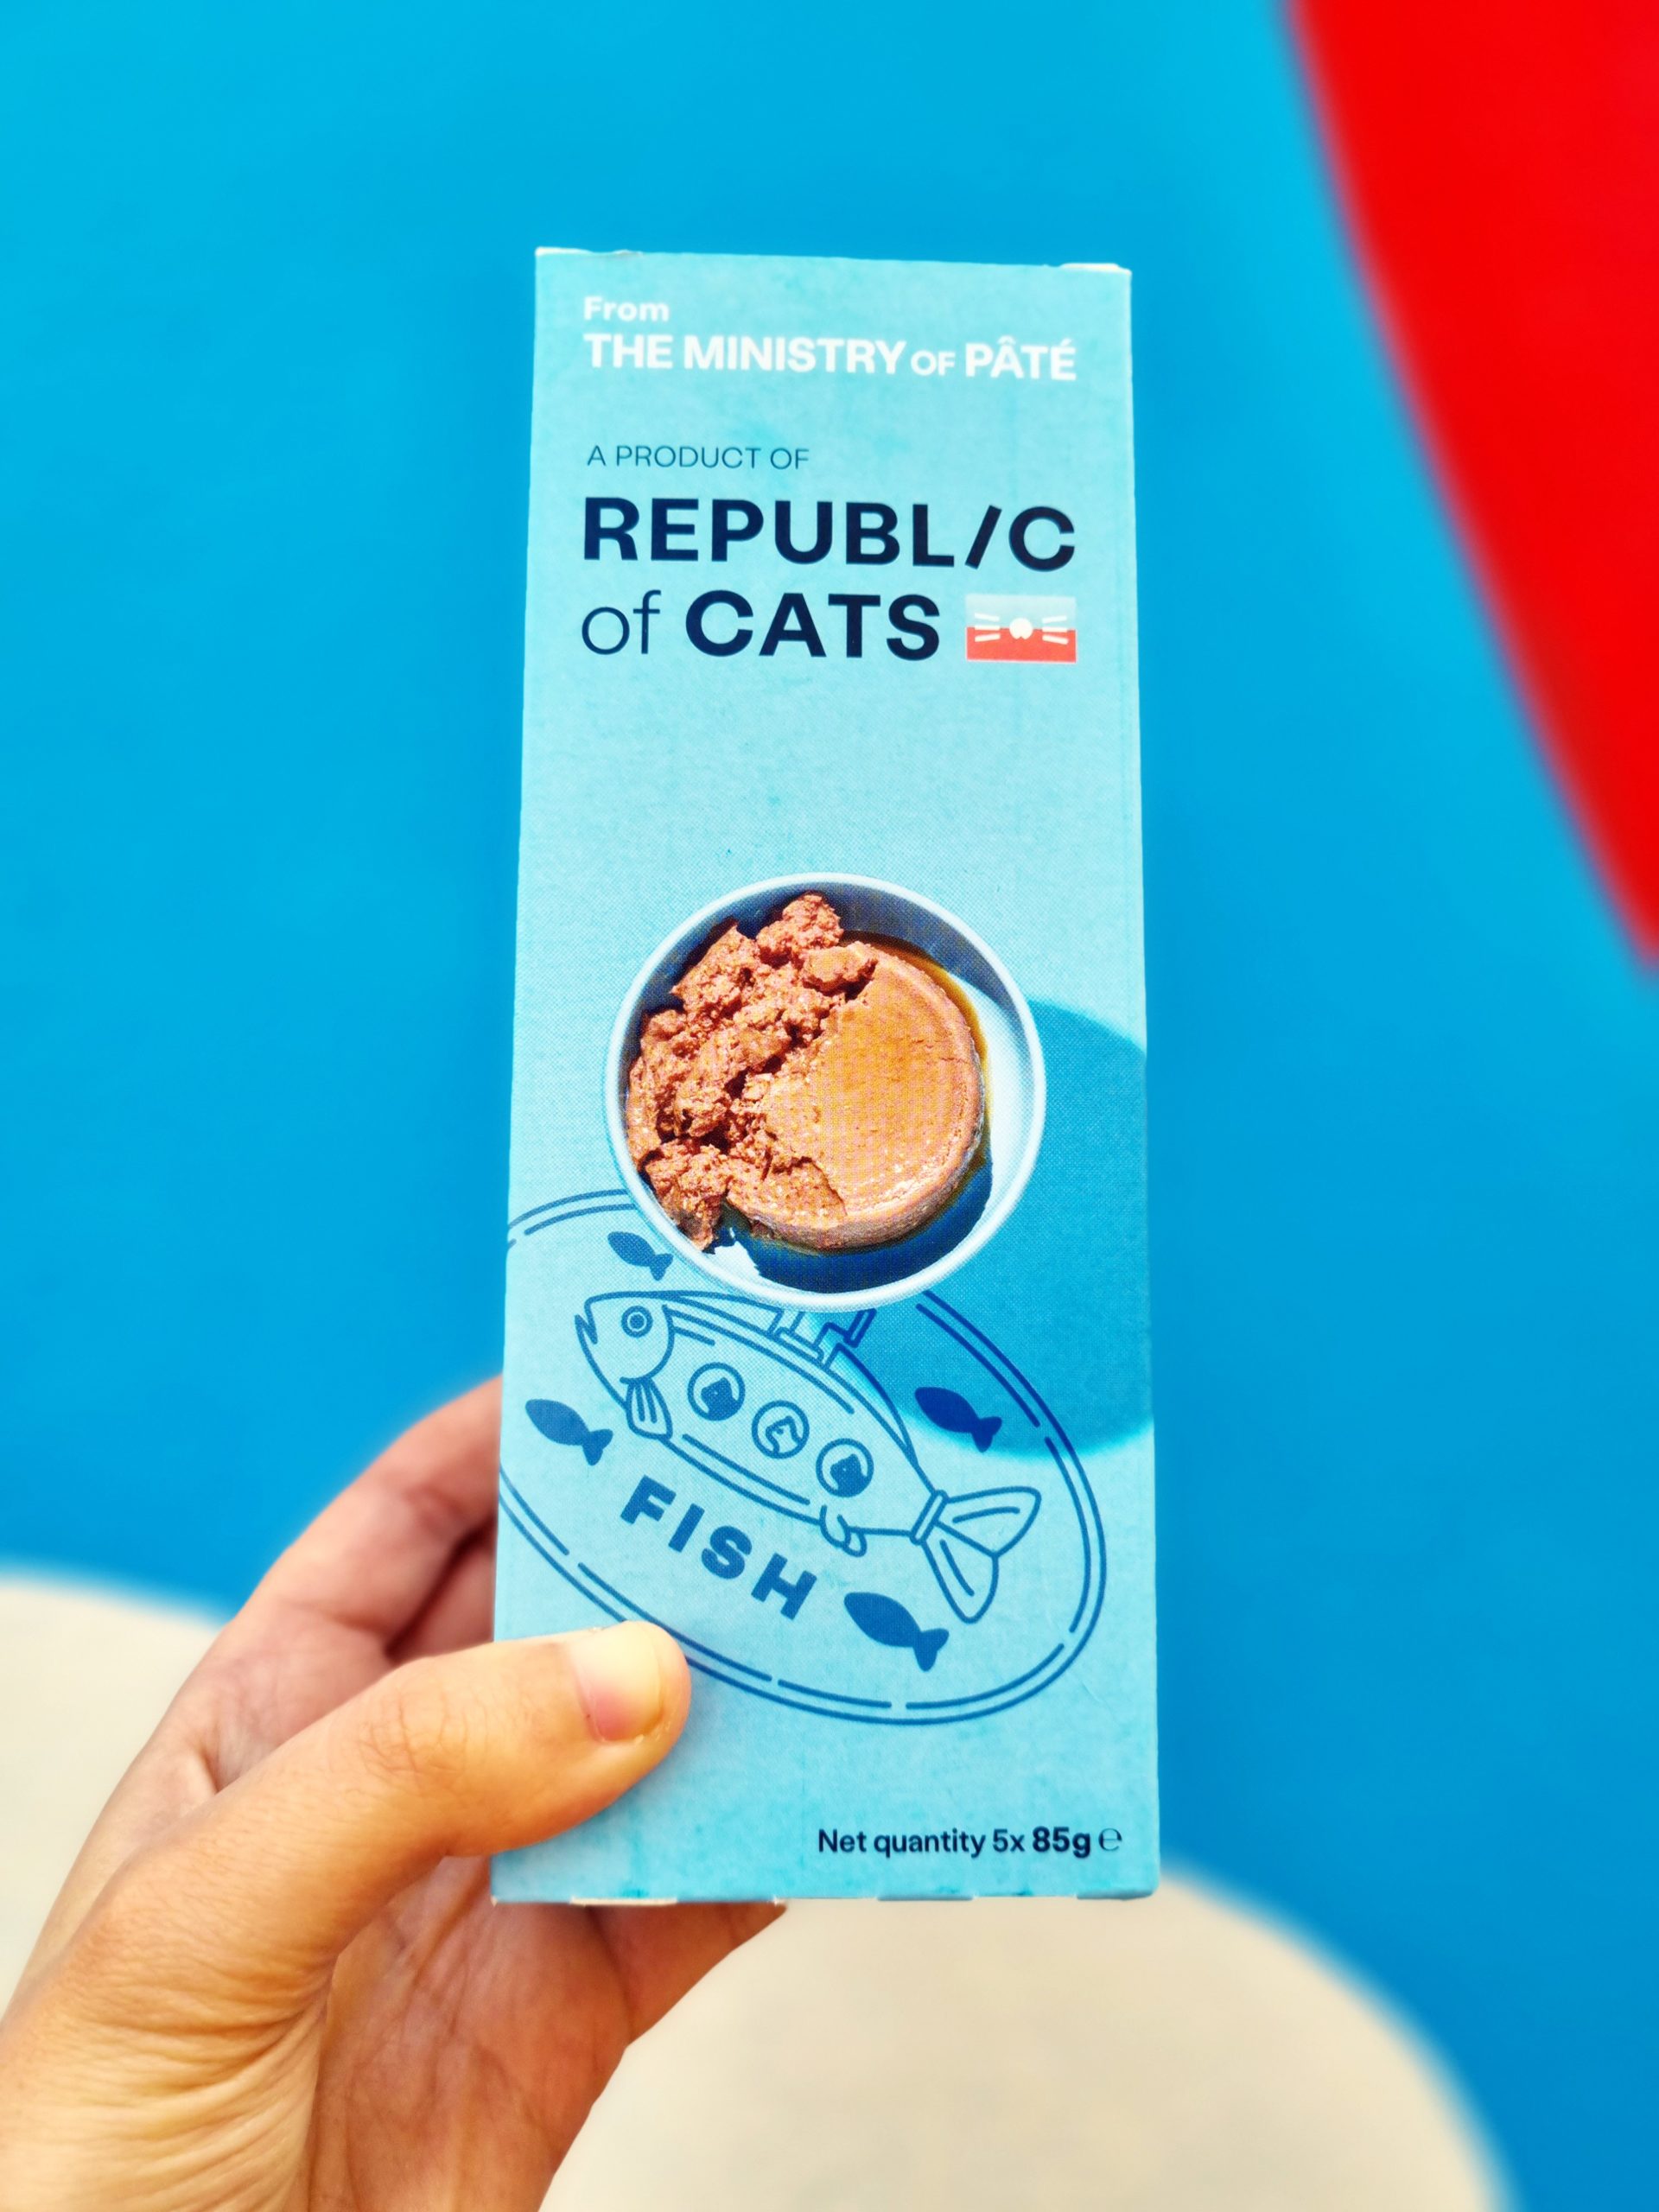 <img src="republic.jpg" alt="republic of cats fish flavour"/> 